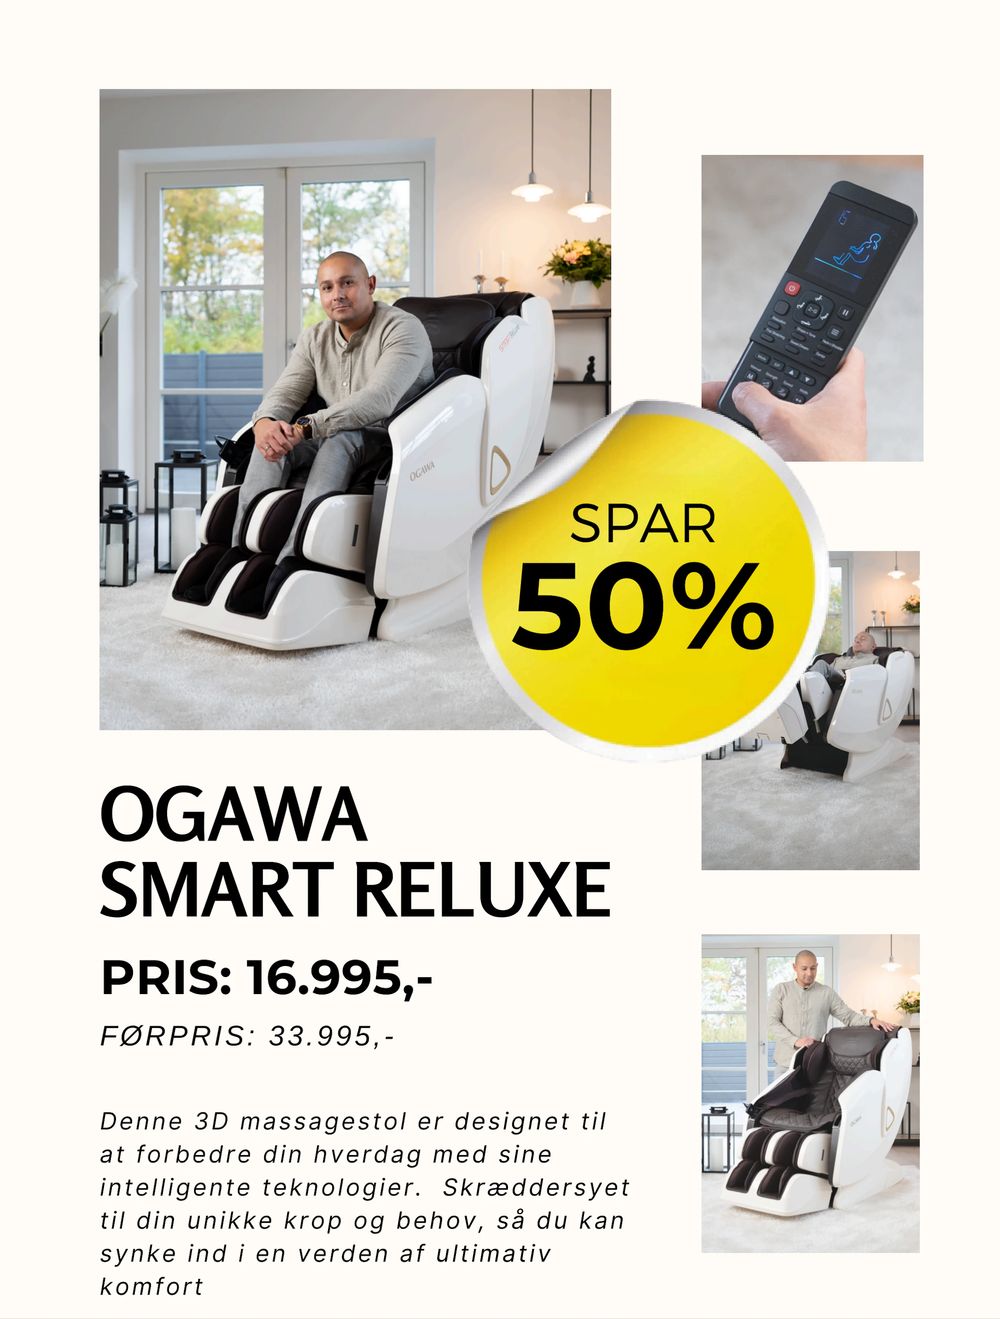 Tilbud på OGAWA SMART RELUXE fra IWAO Spa & Wellness til 16.995 kr.